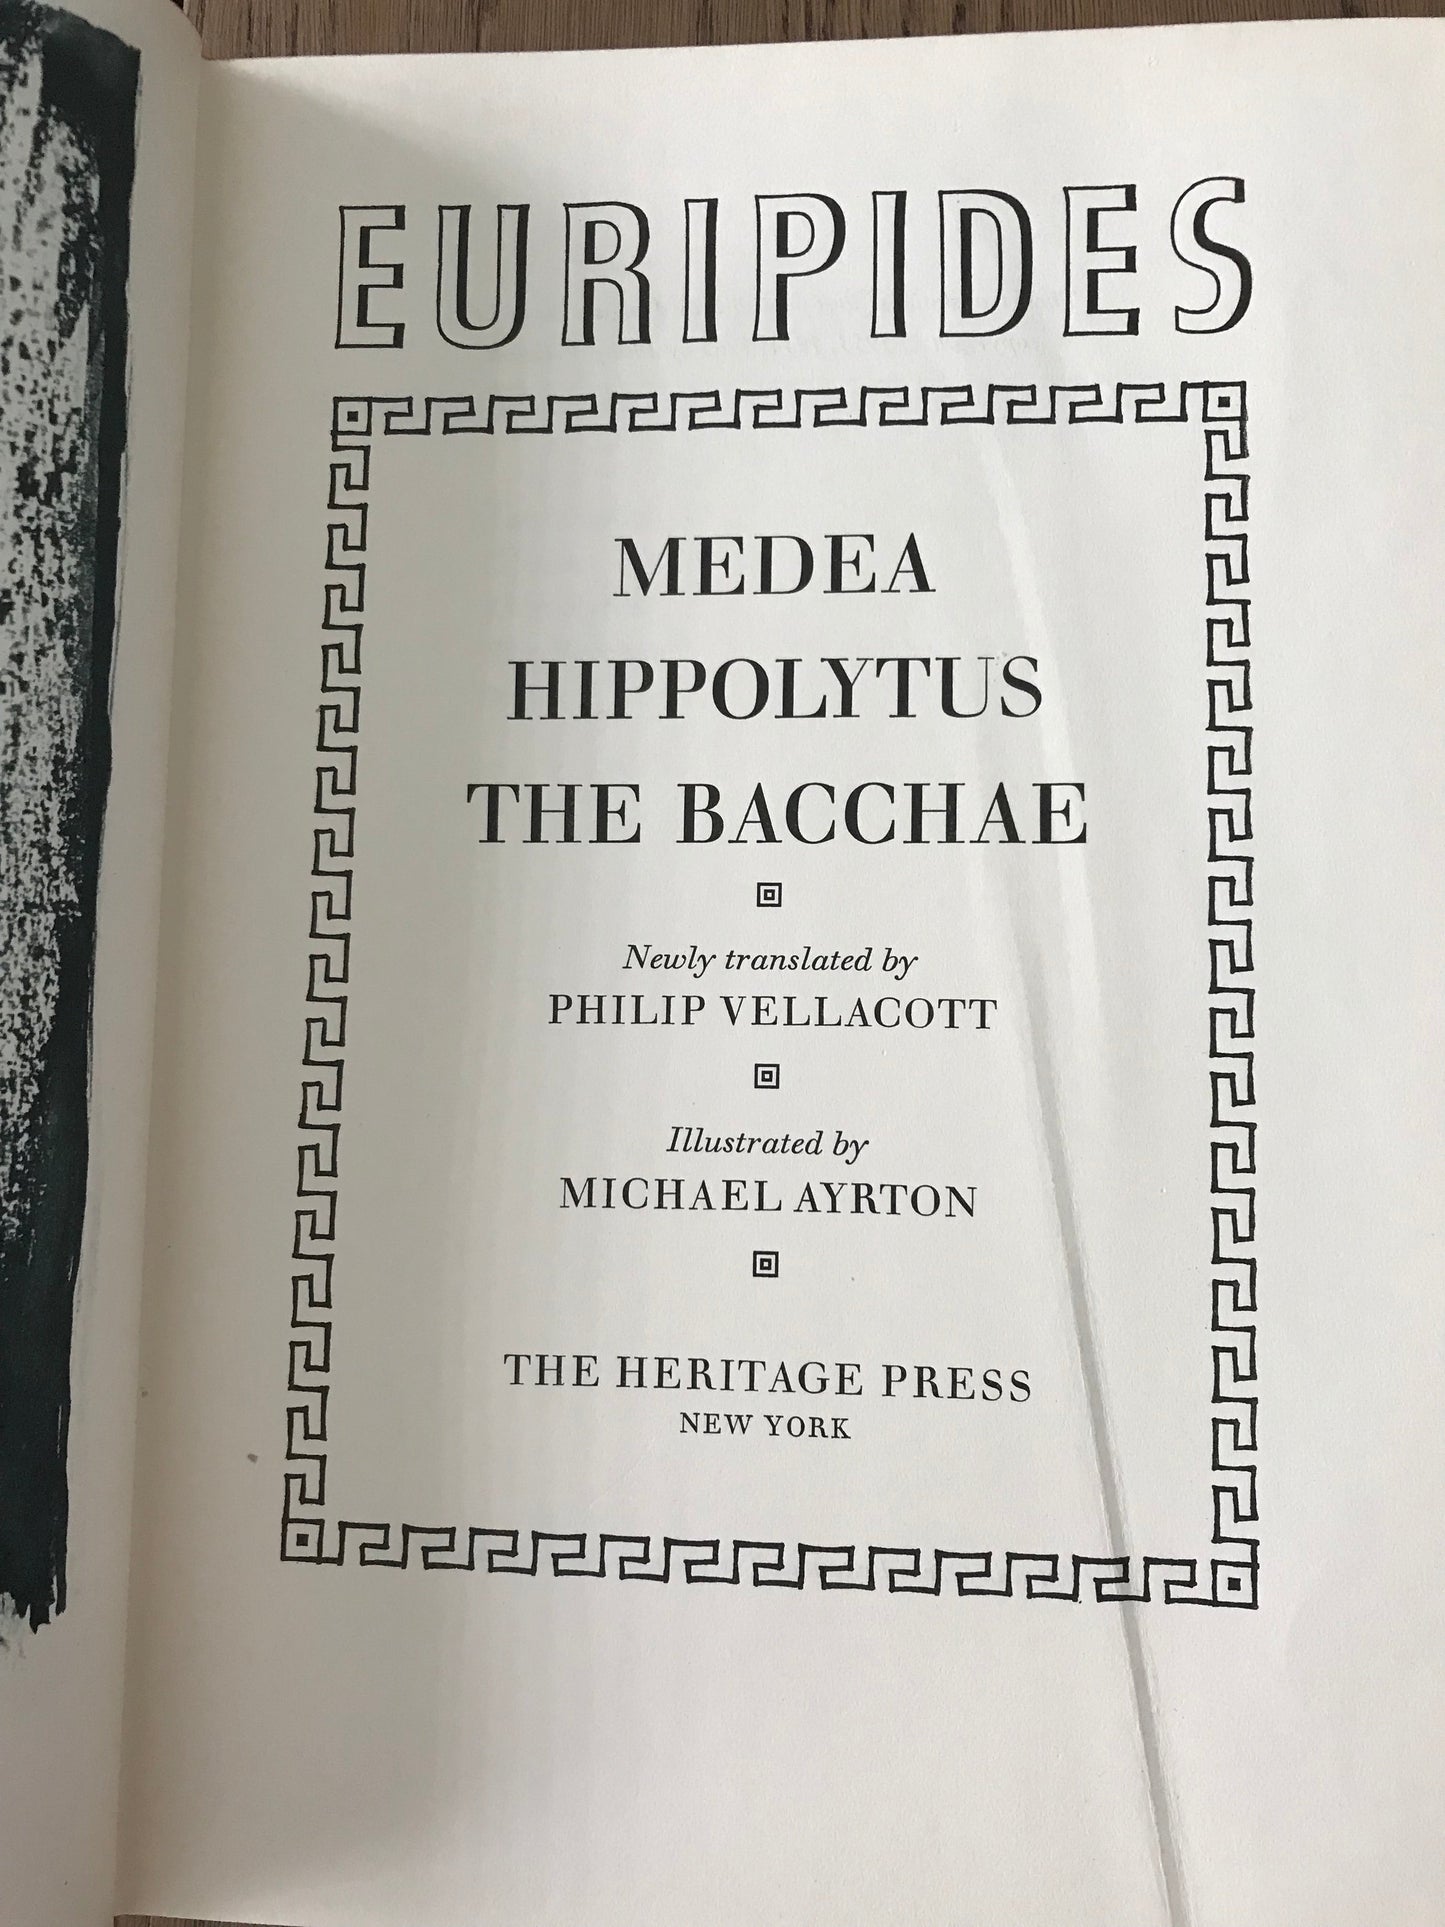 MEDEA HIPPOLYTUS THE BACCHAE -BY EURIPIDES BooksCardsNBikes